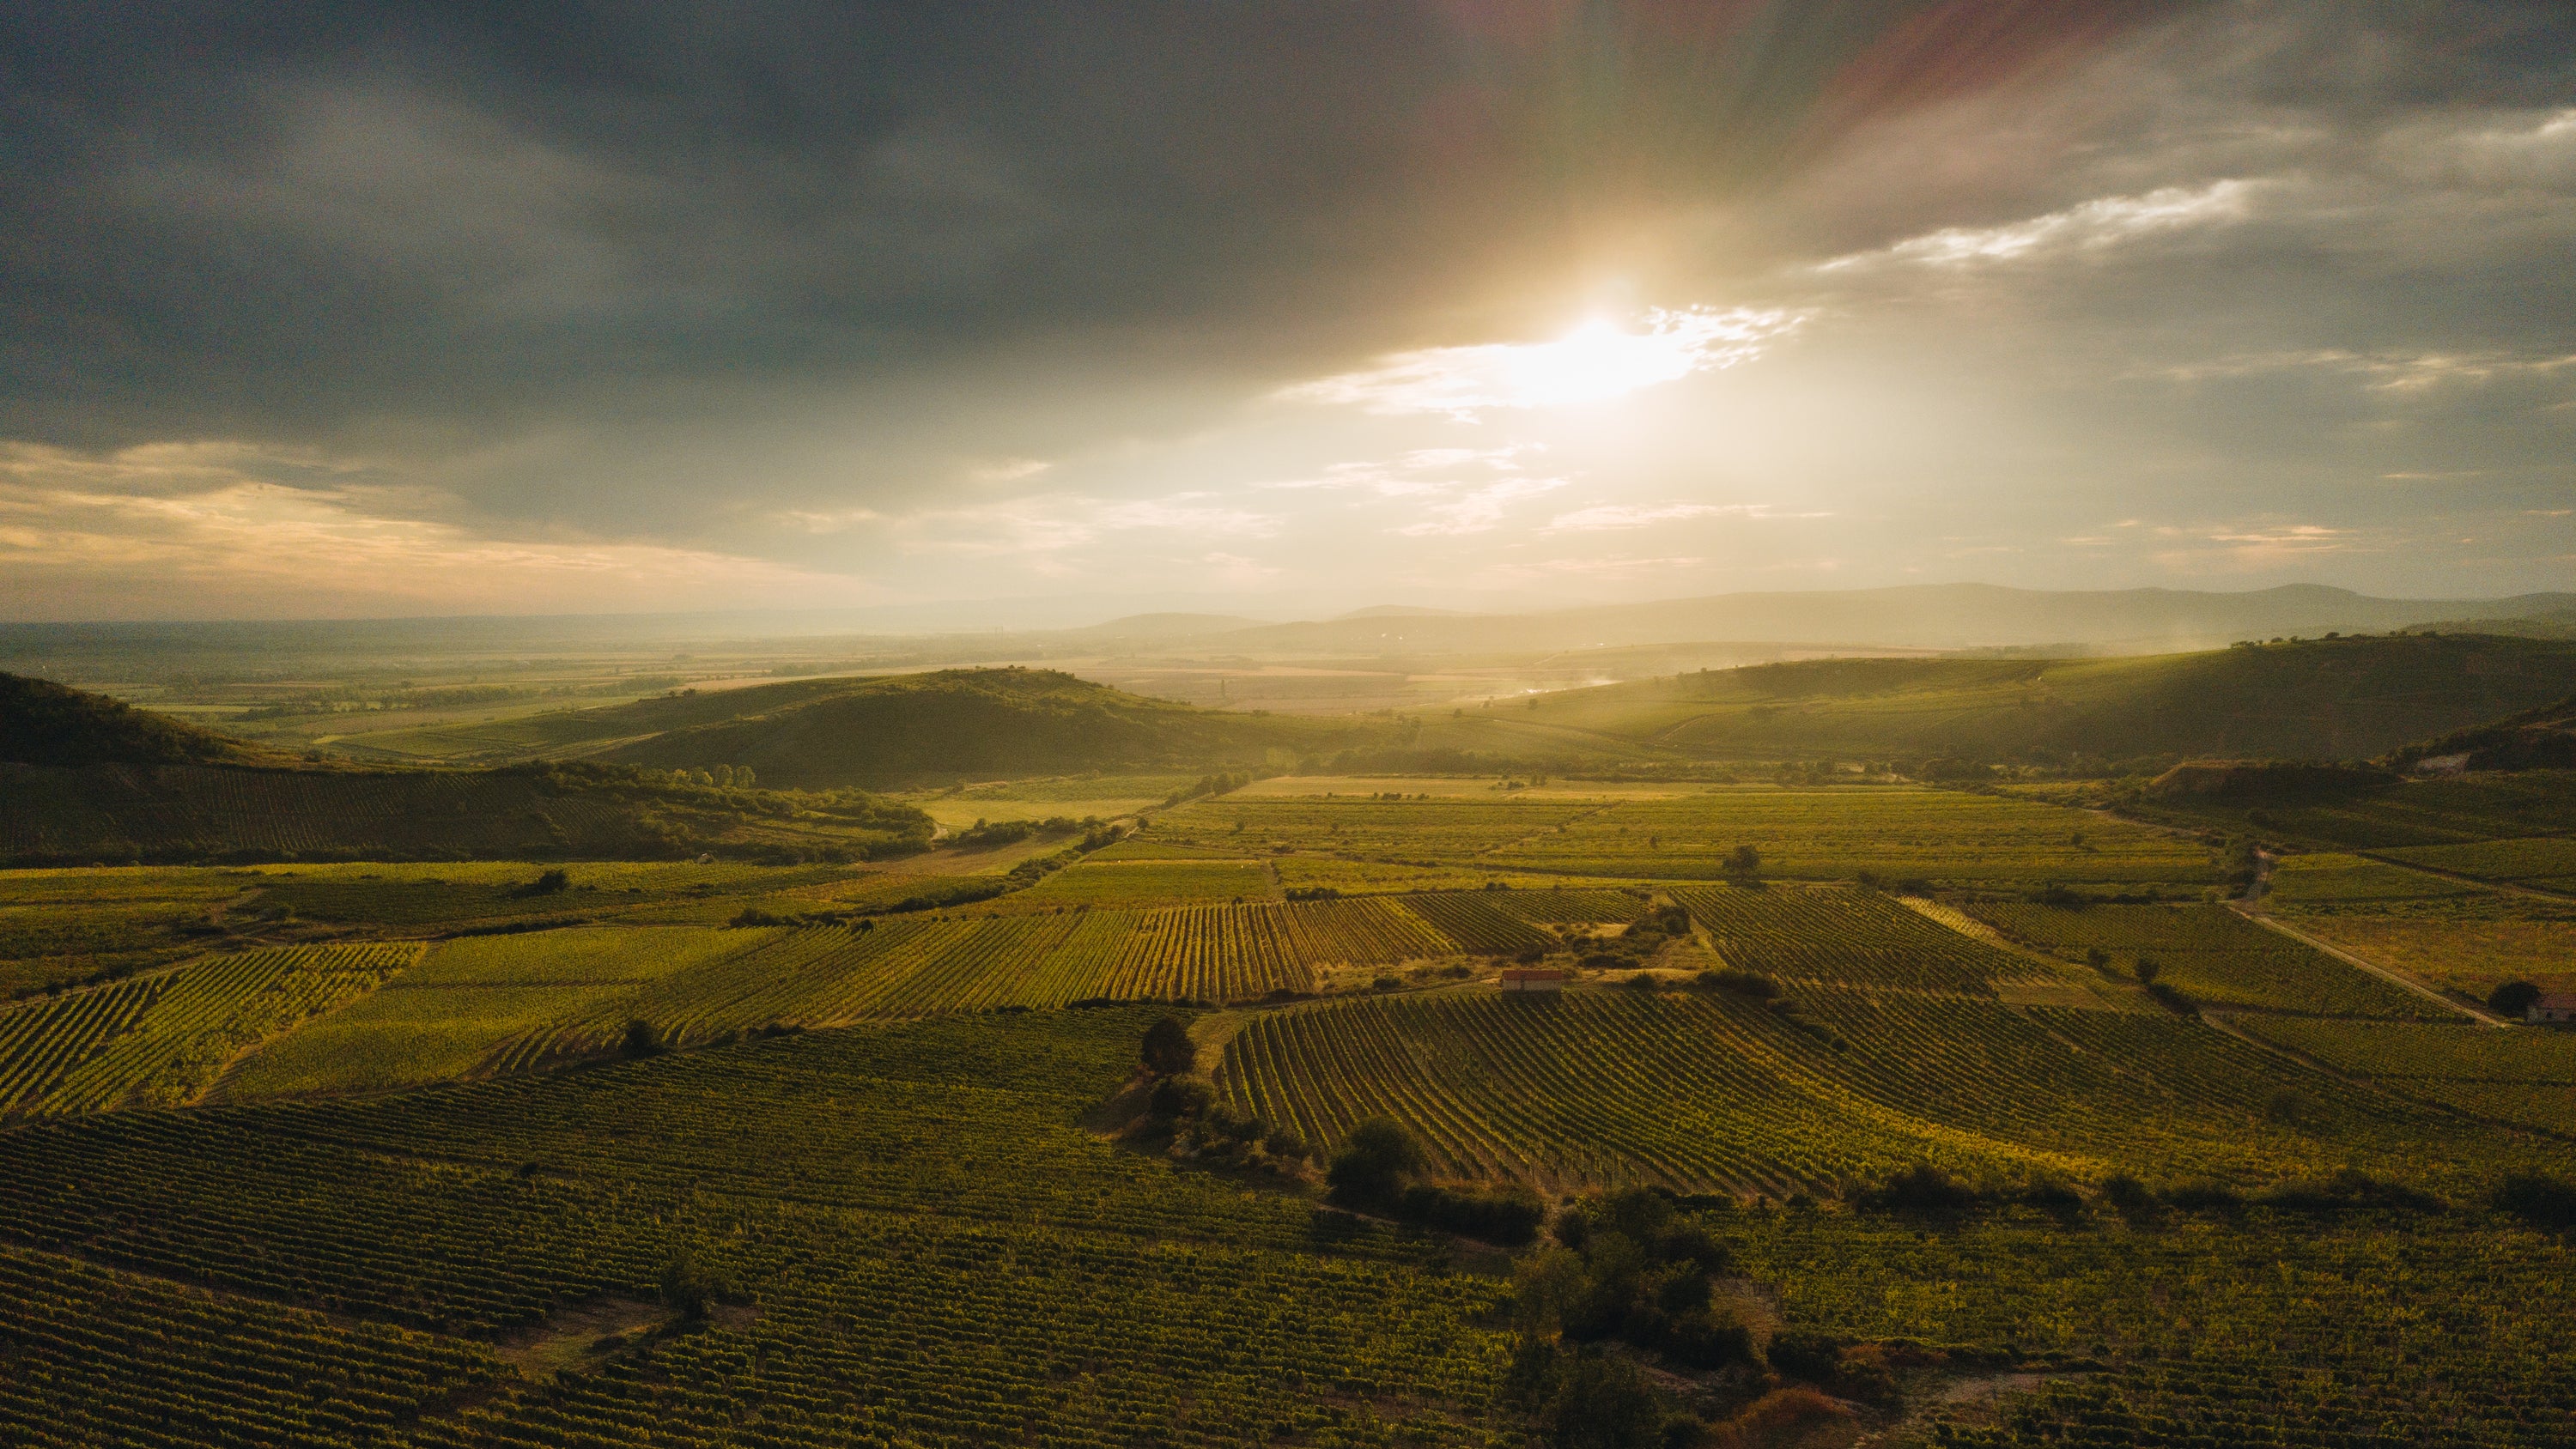 The Tokaji wine region in the Hungary